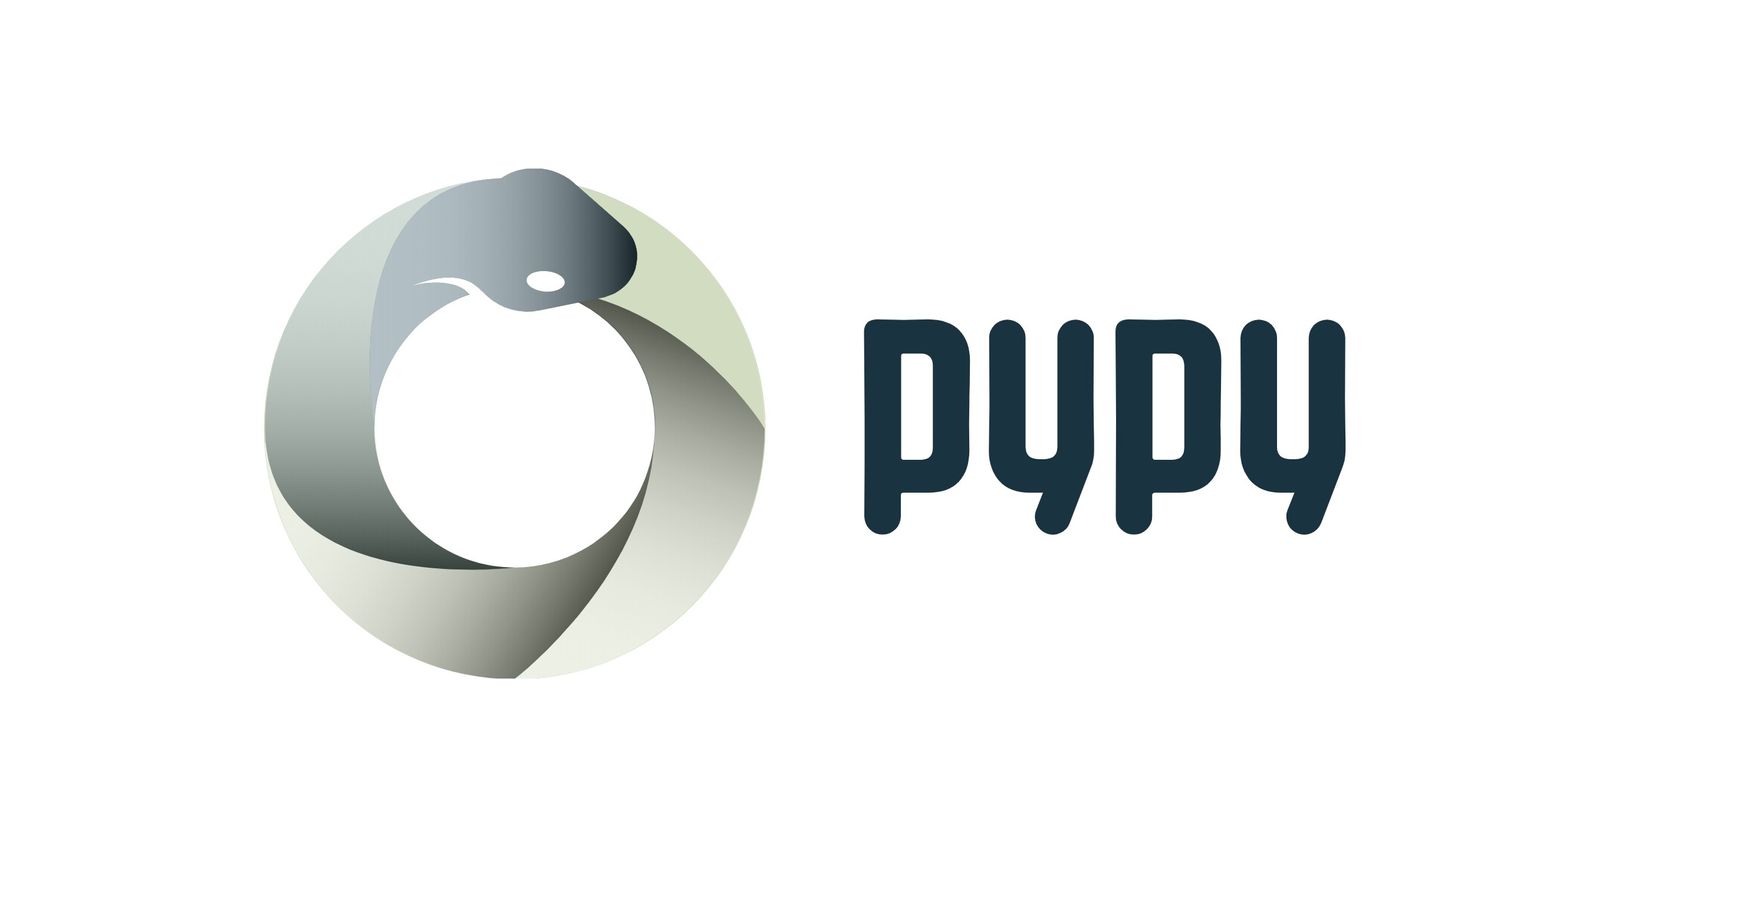 PyPy 的 logo 是一条衔尾蛇，体现了“用Python写Python”